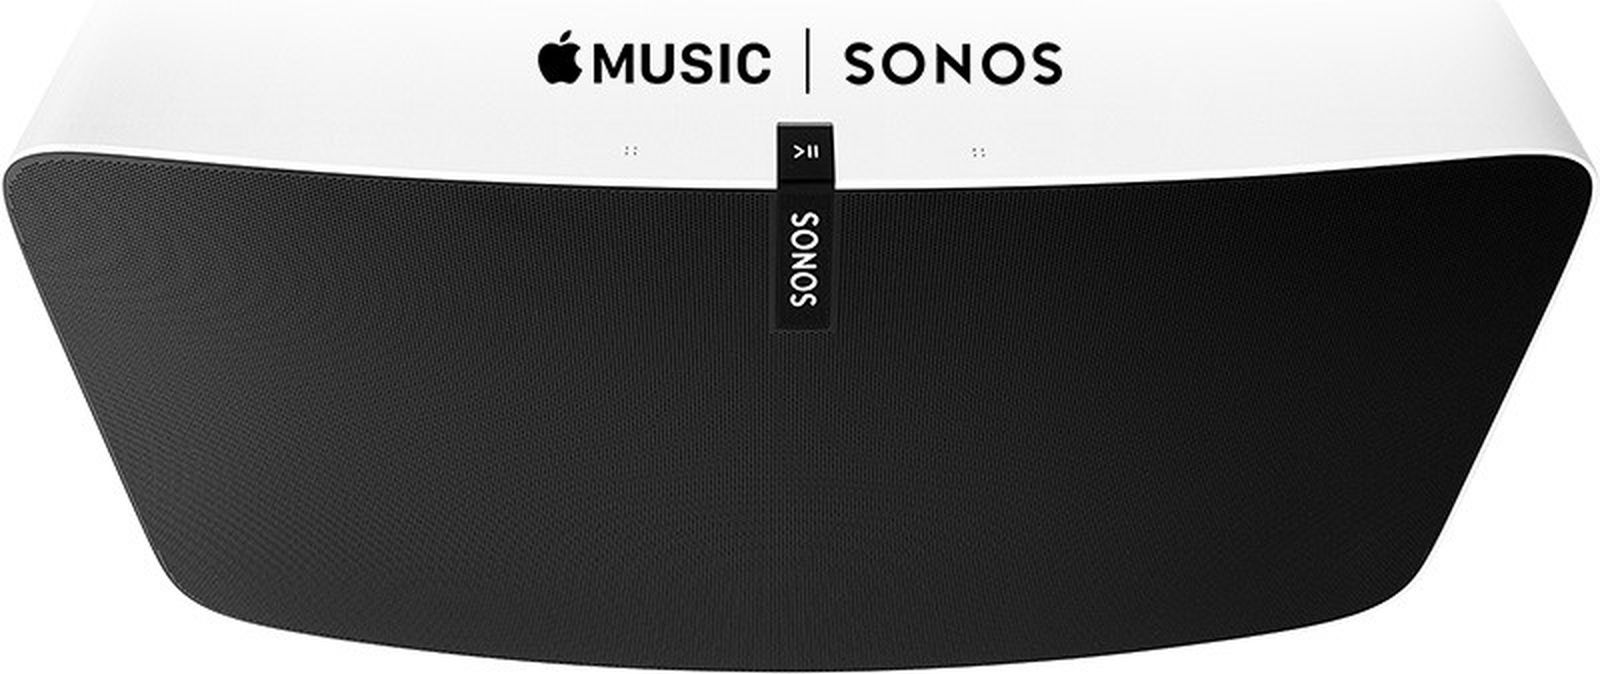 sonos controller download for mac